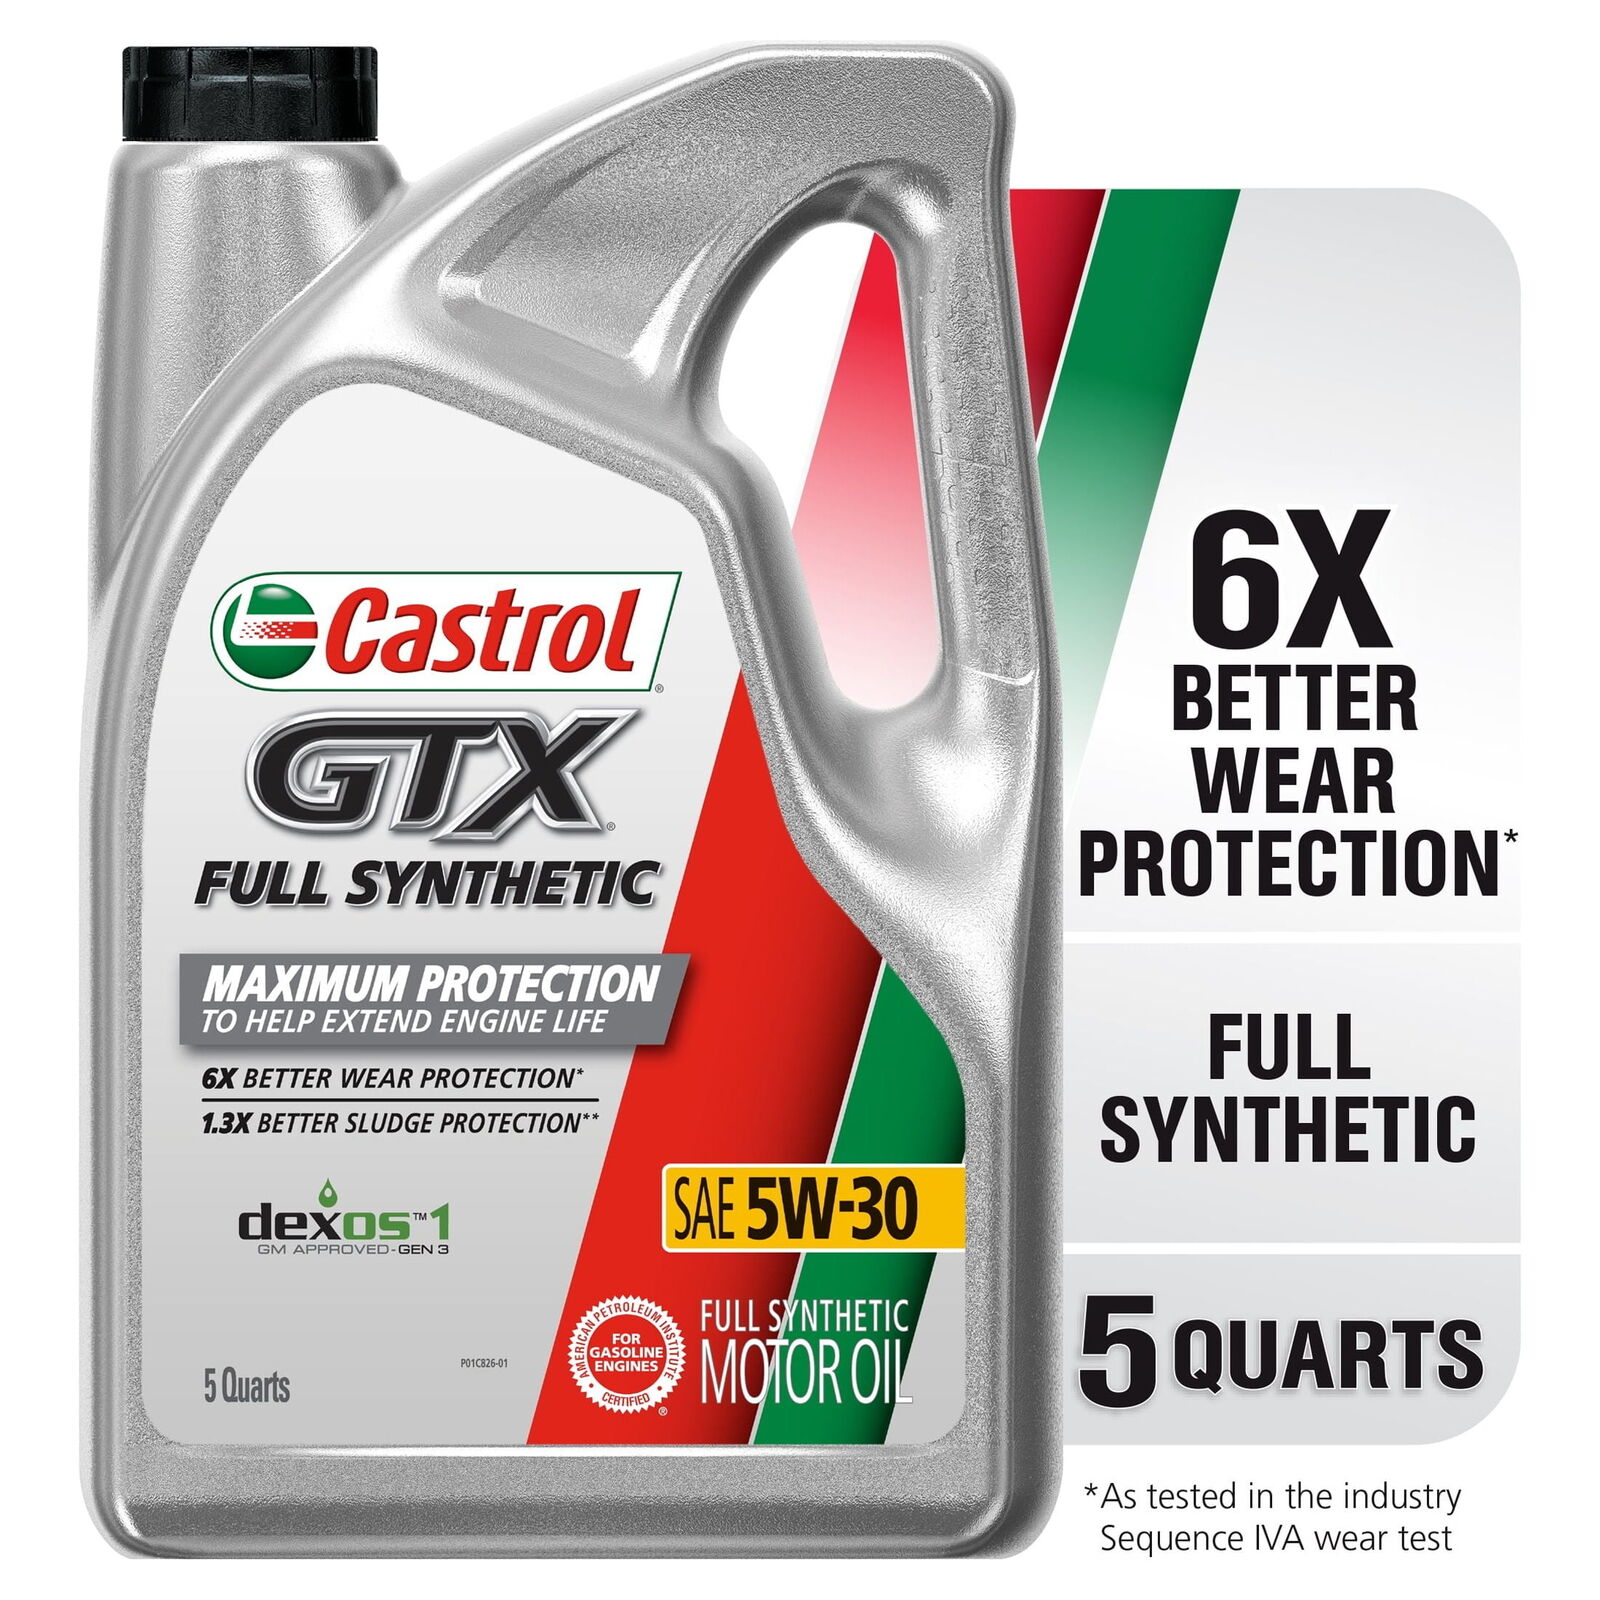 Castrol GTX Full Synthetic 5W-30 Motor Oil, 5 Quarts,  than industry standards**